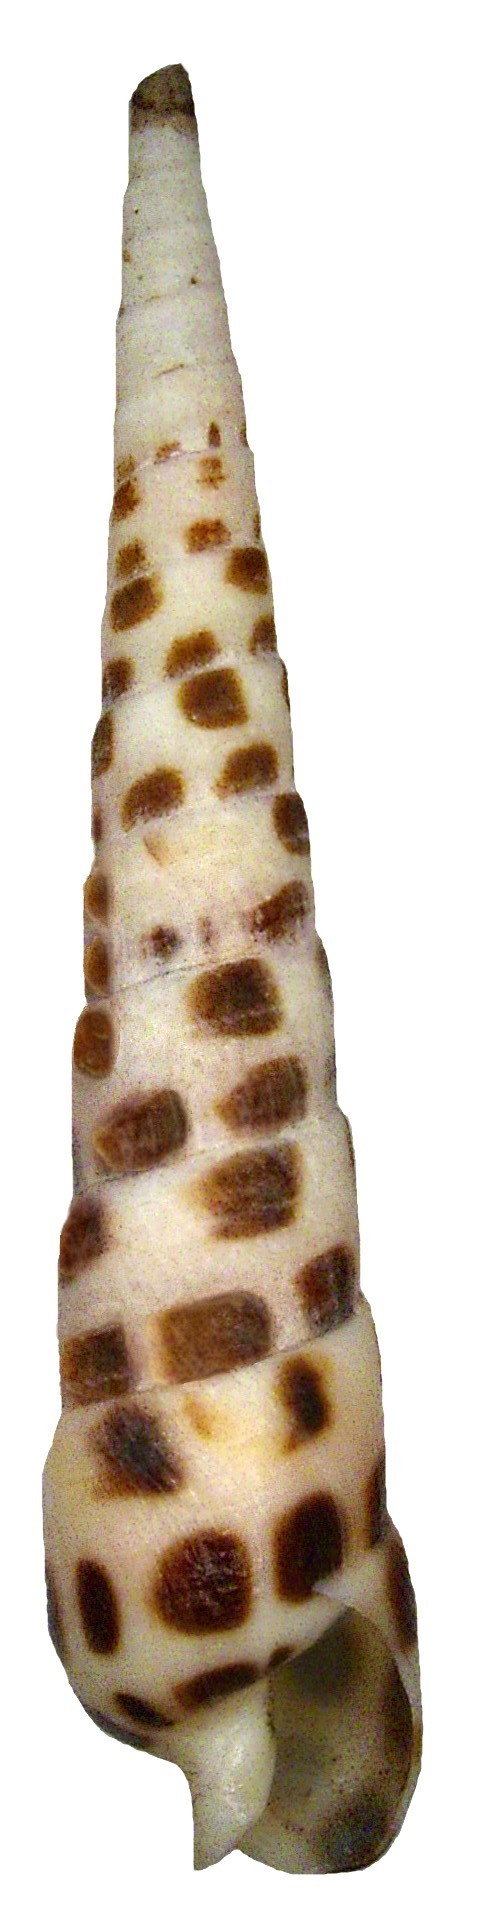 Chocolate spotted auger (Terebra subulata)